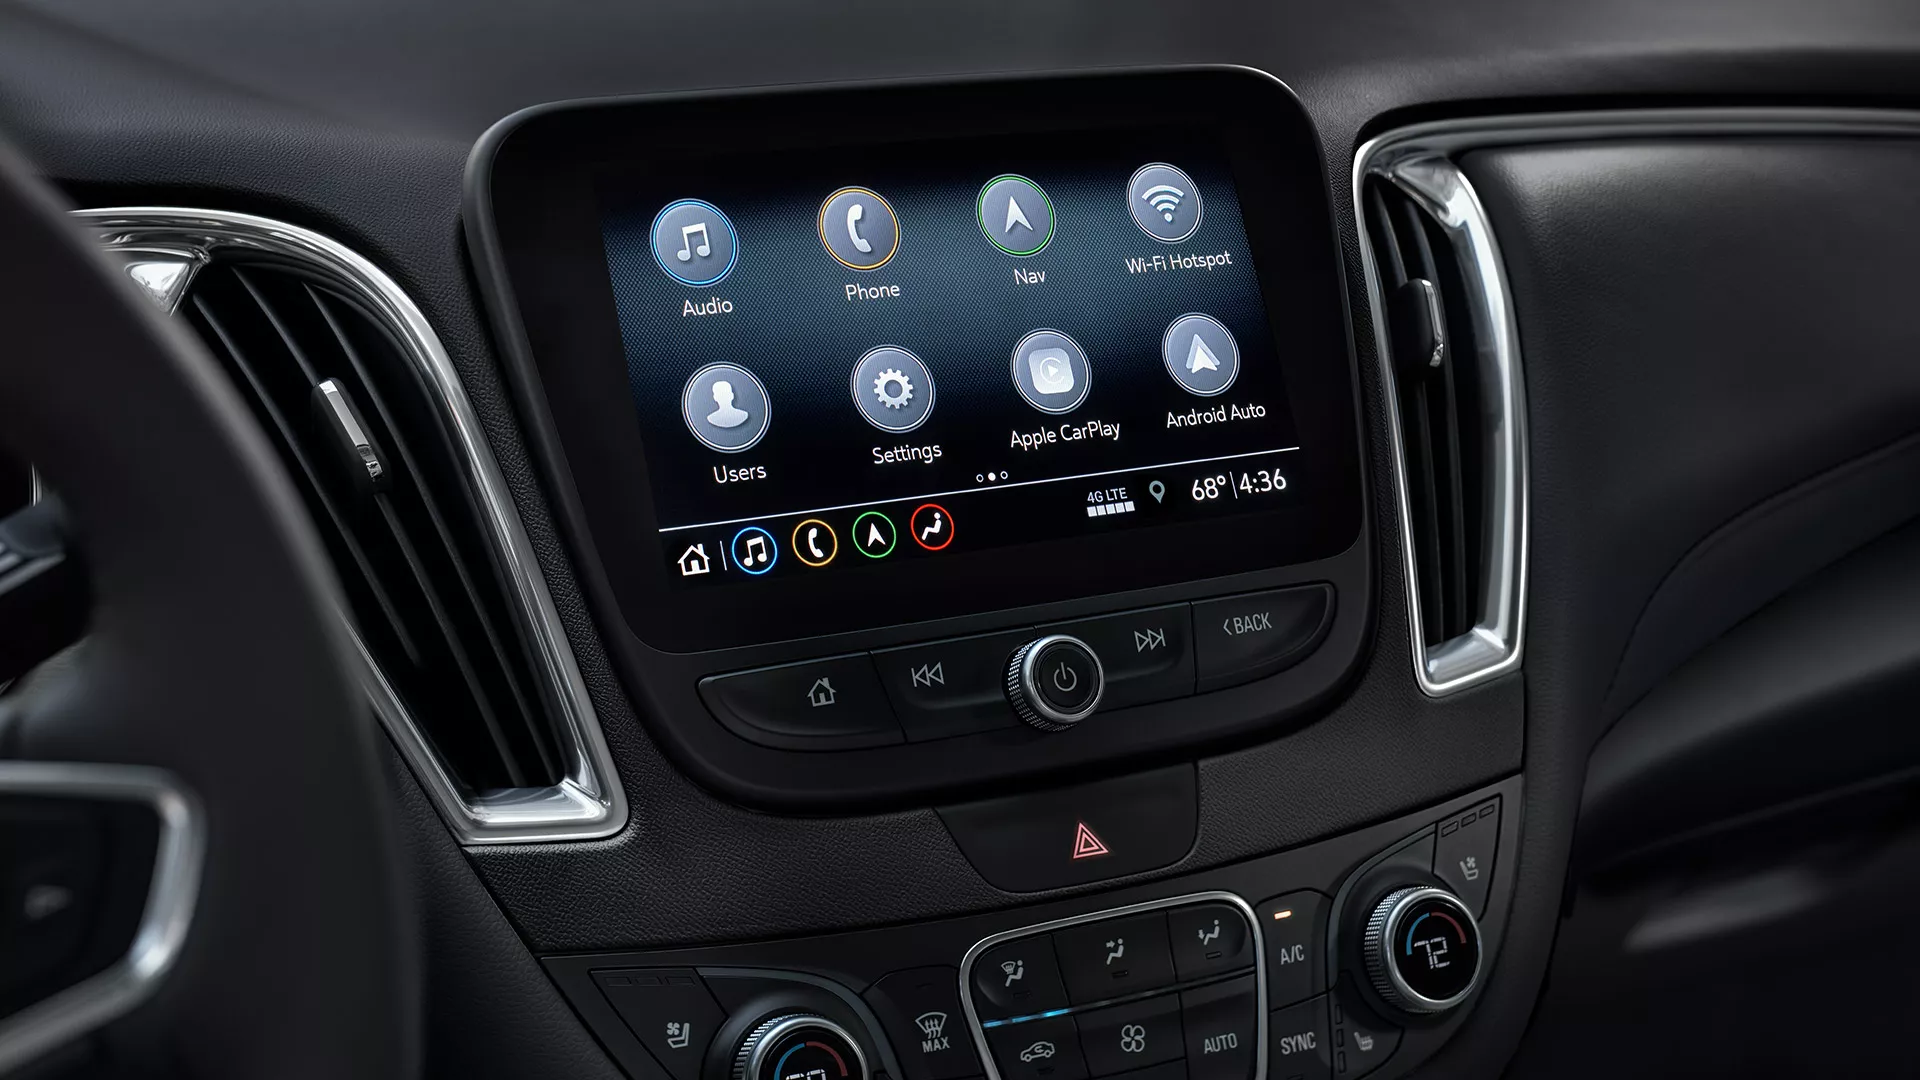 Chevrolet Infotainment 3 touch screen on Malibu